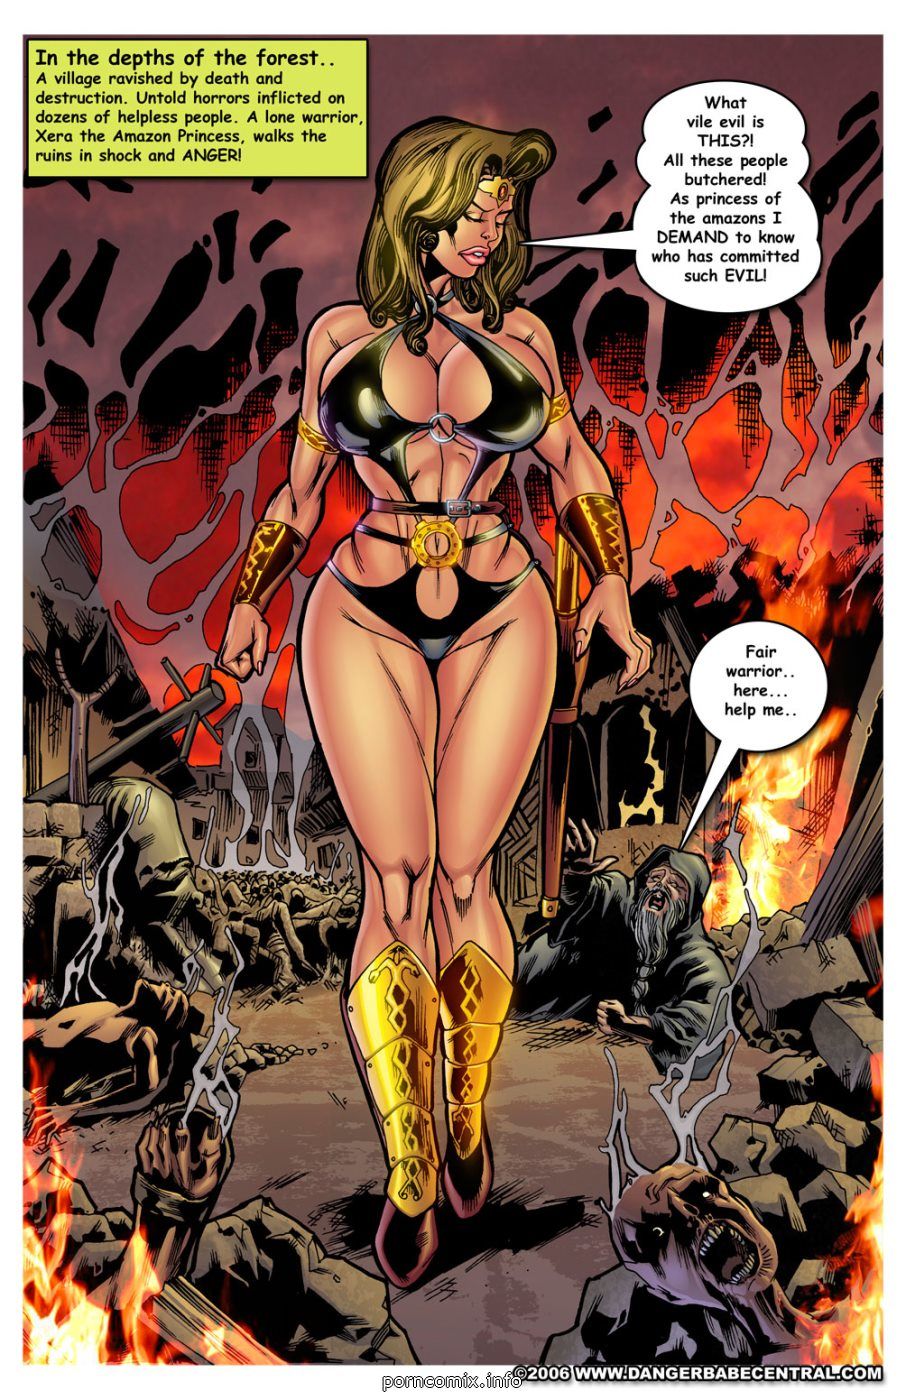 Xera - Amazon Princess, DangerBabeCentral page 2